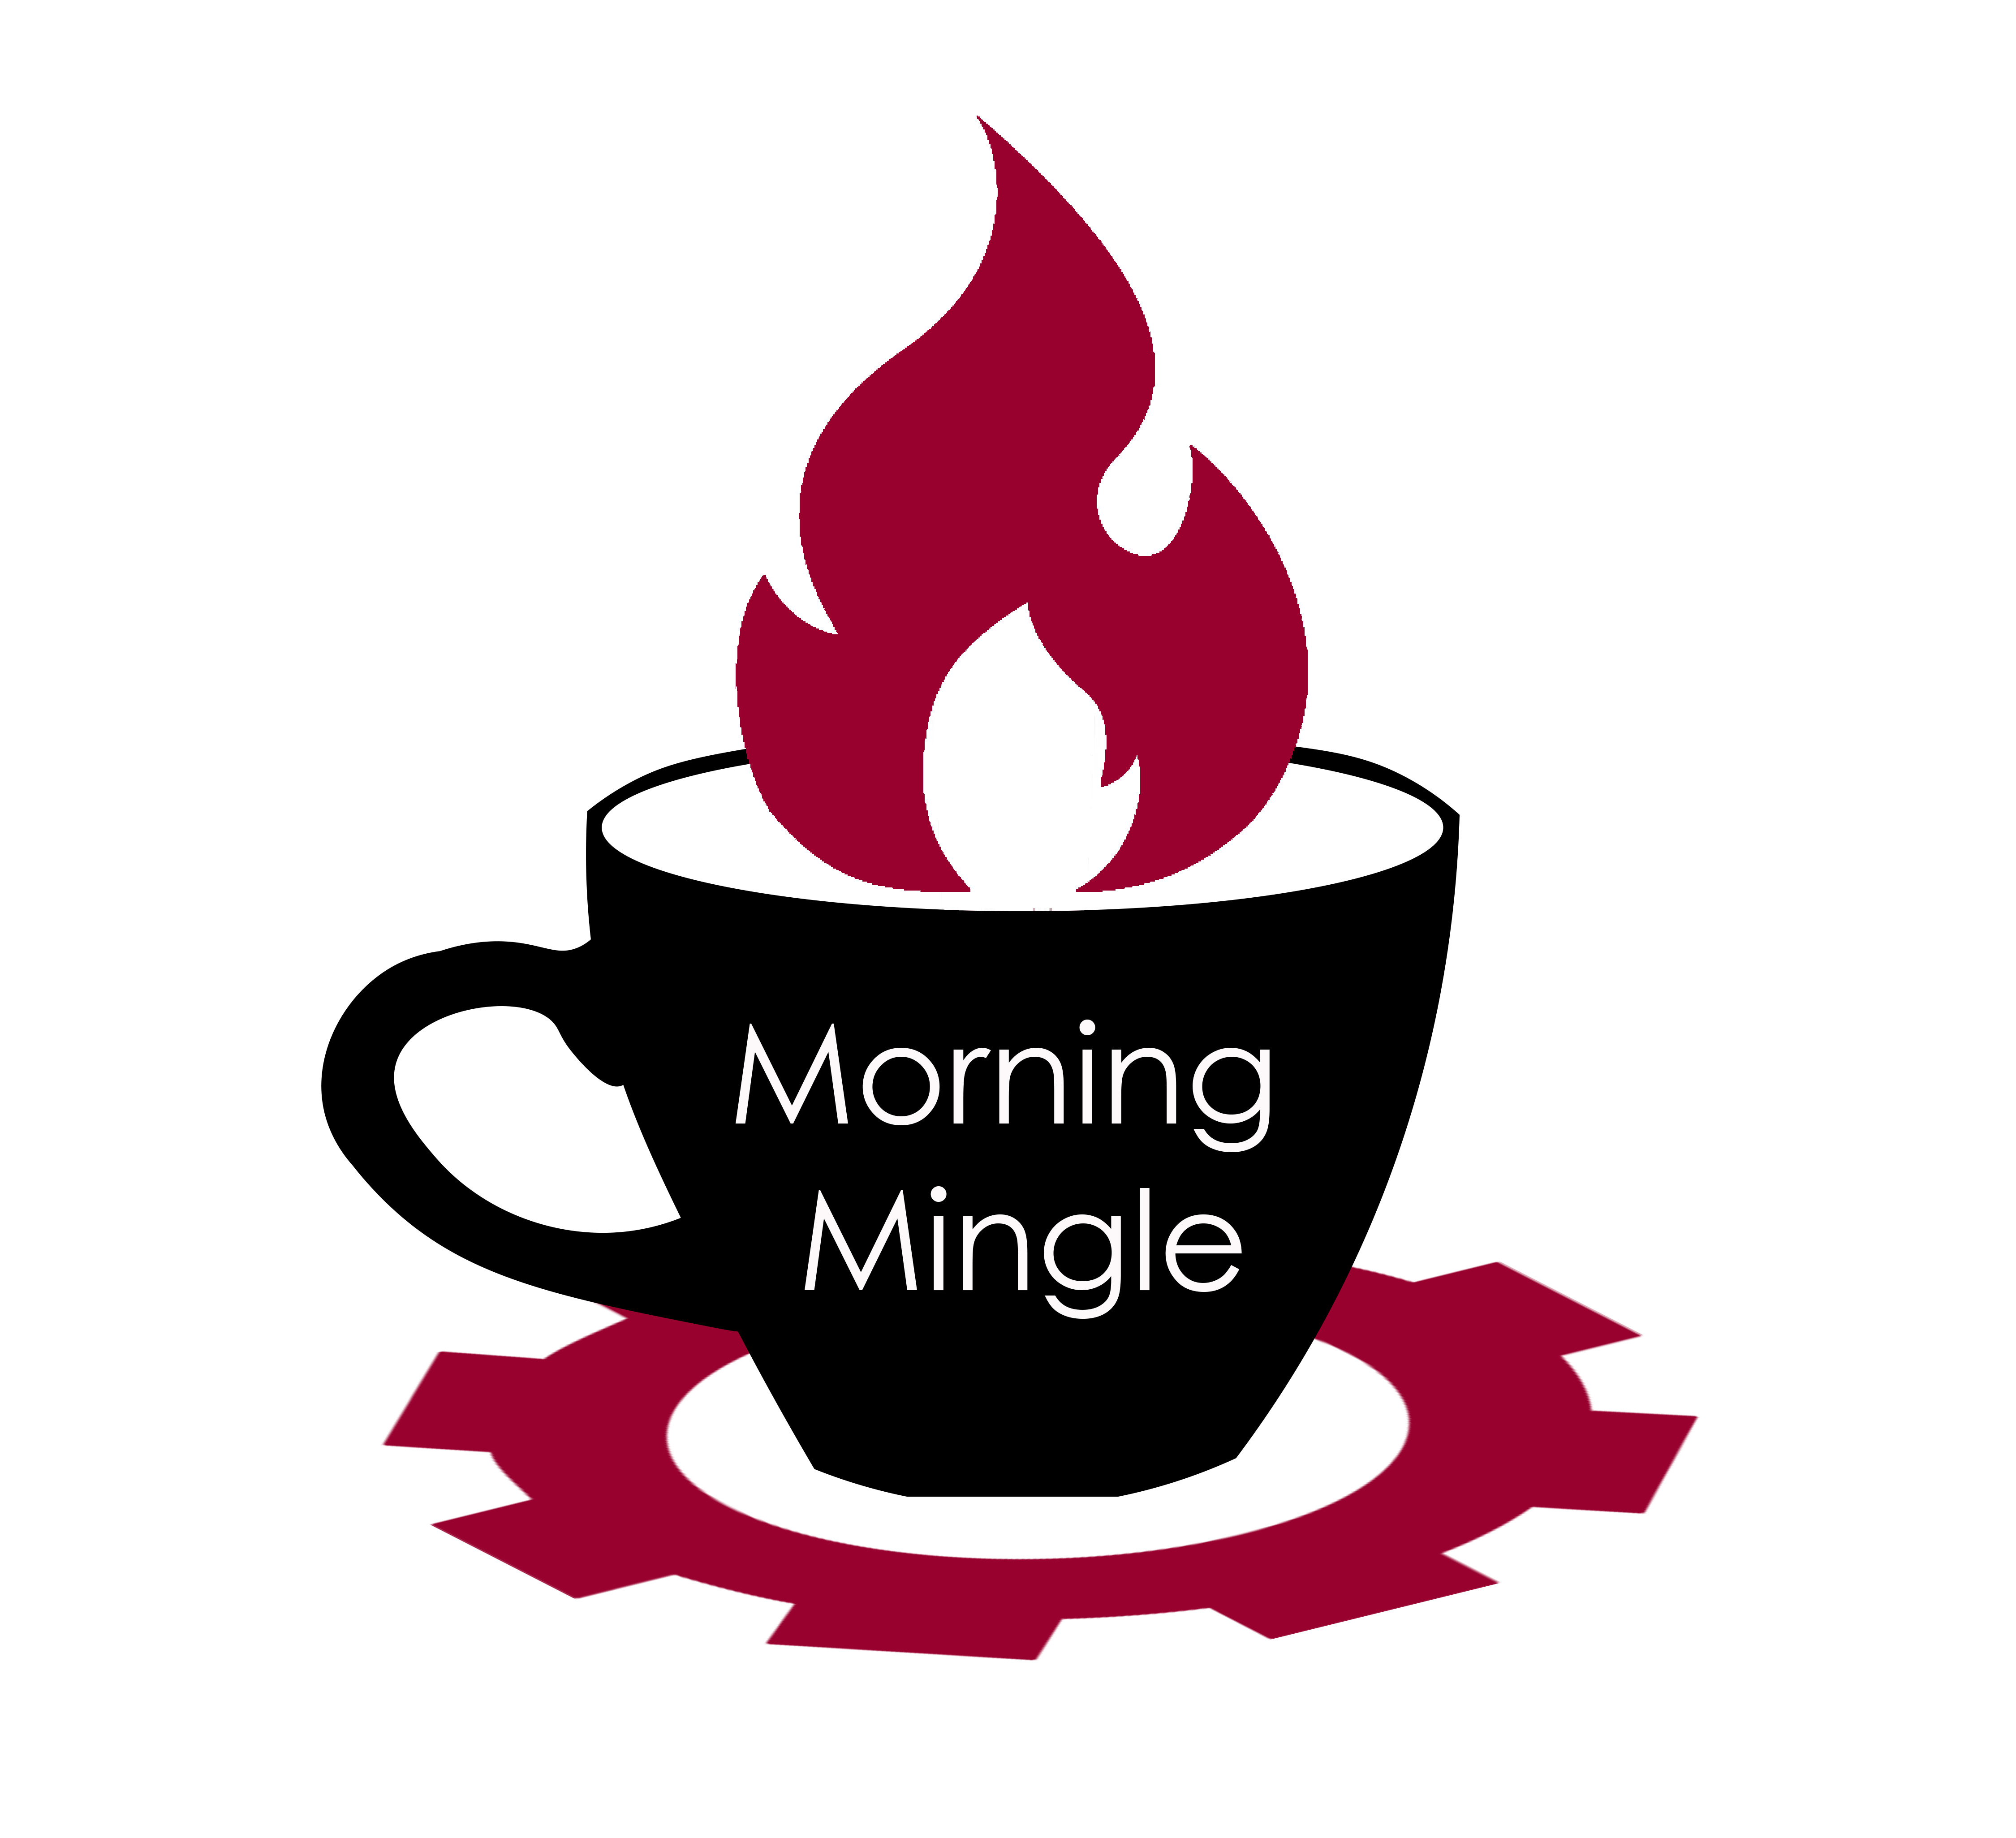 Morning Mingle graphic